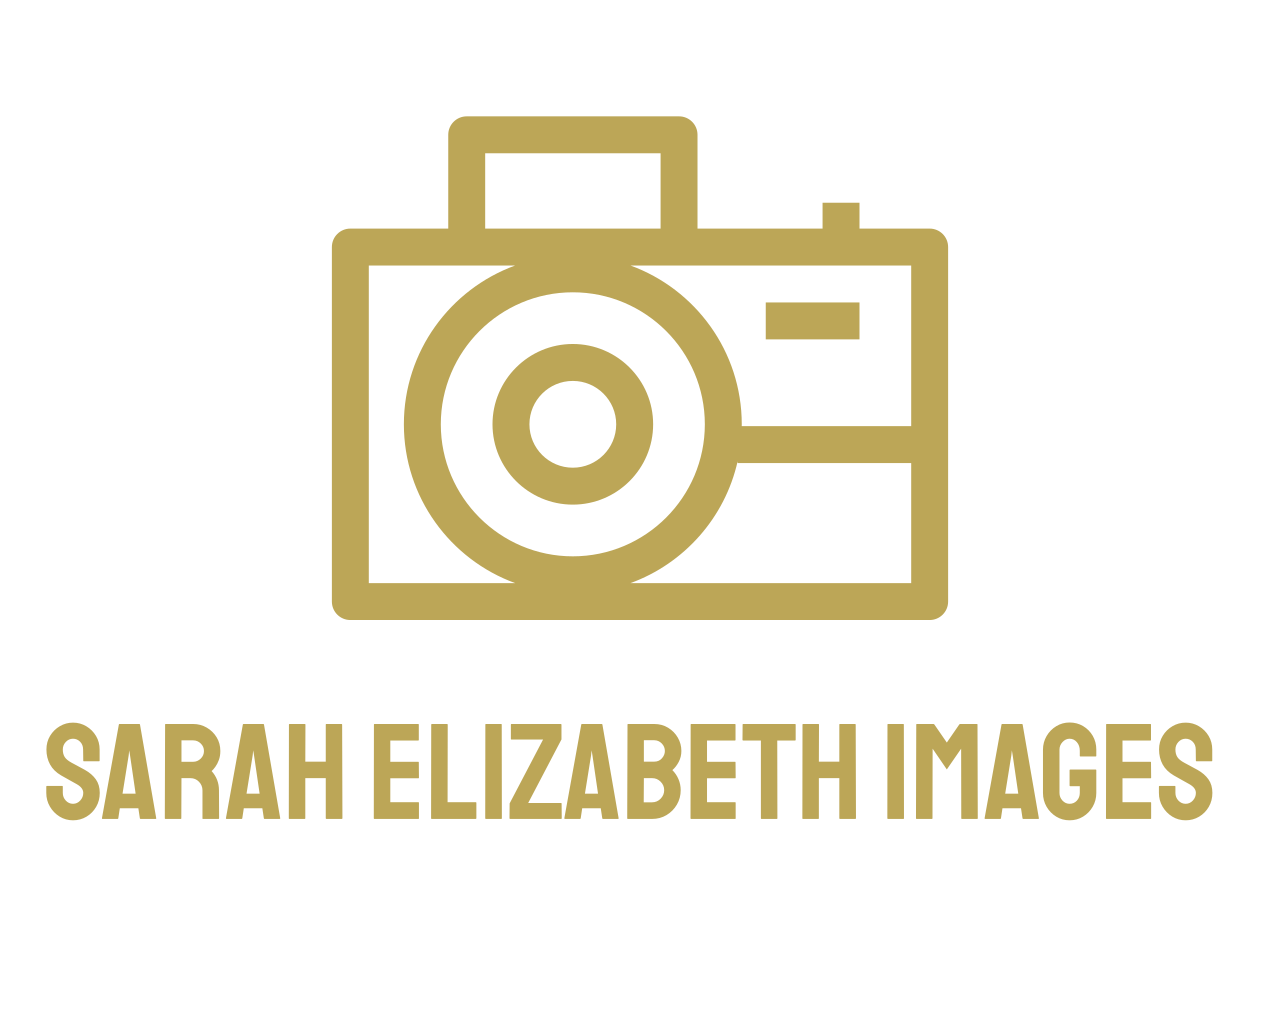 Sarah Elizabeth Images 